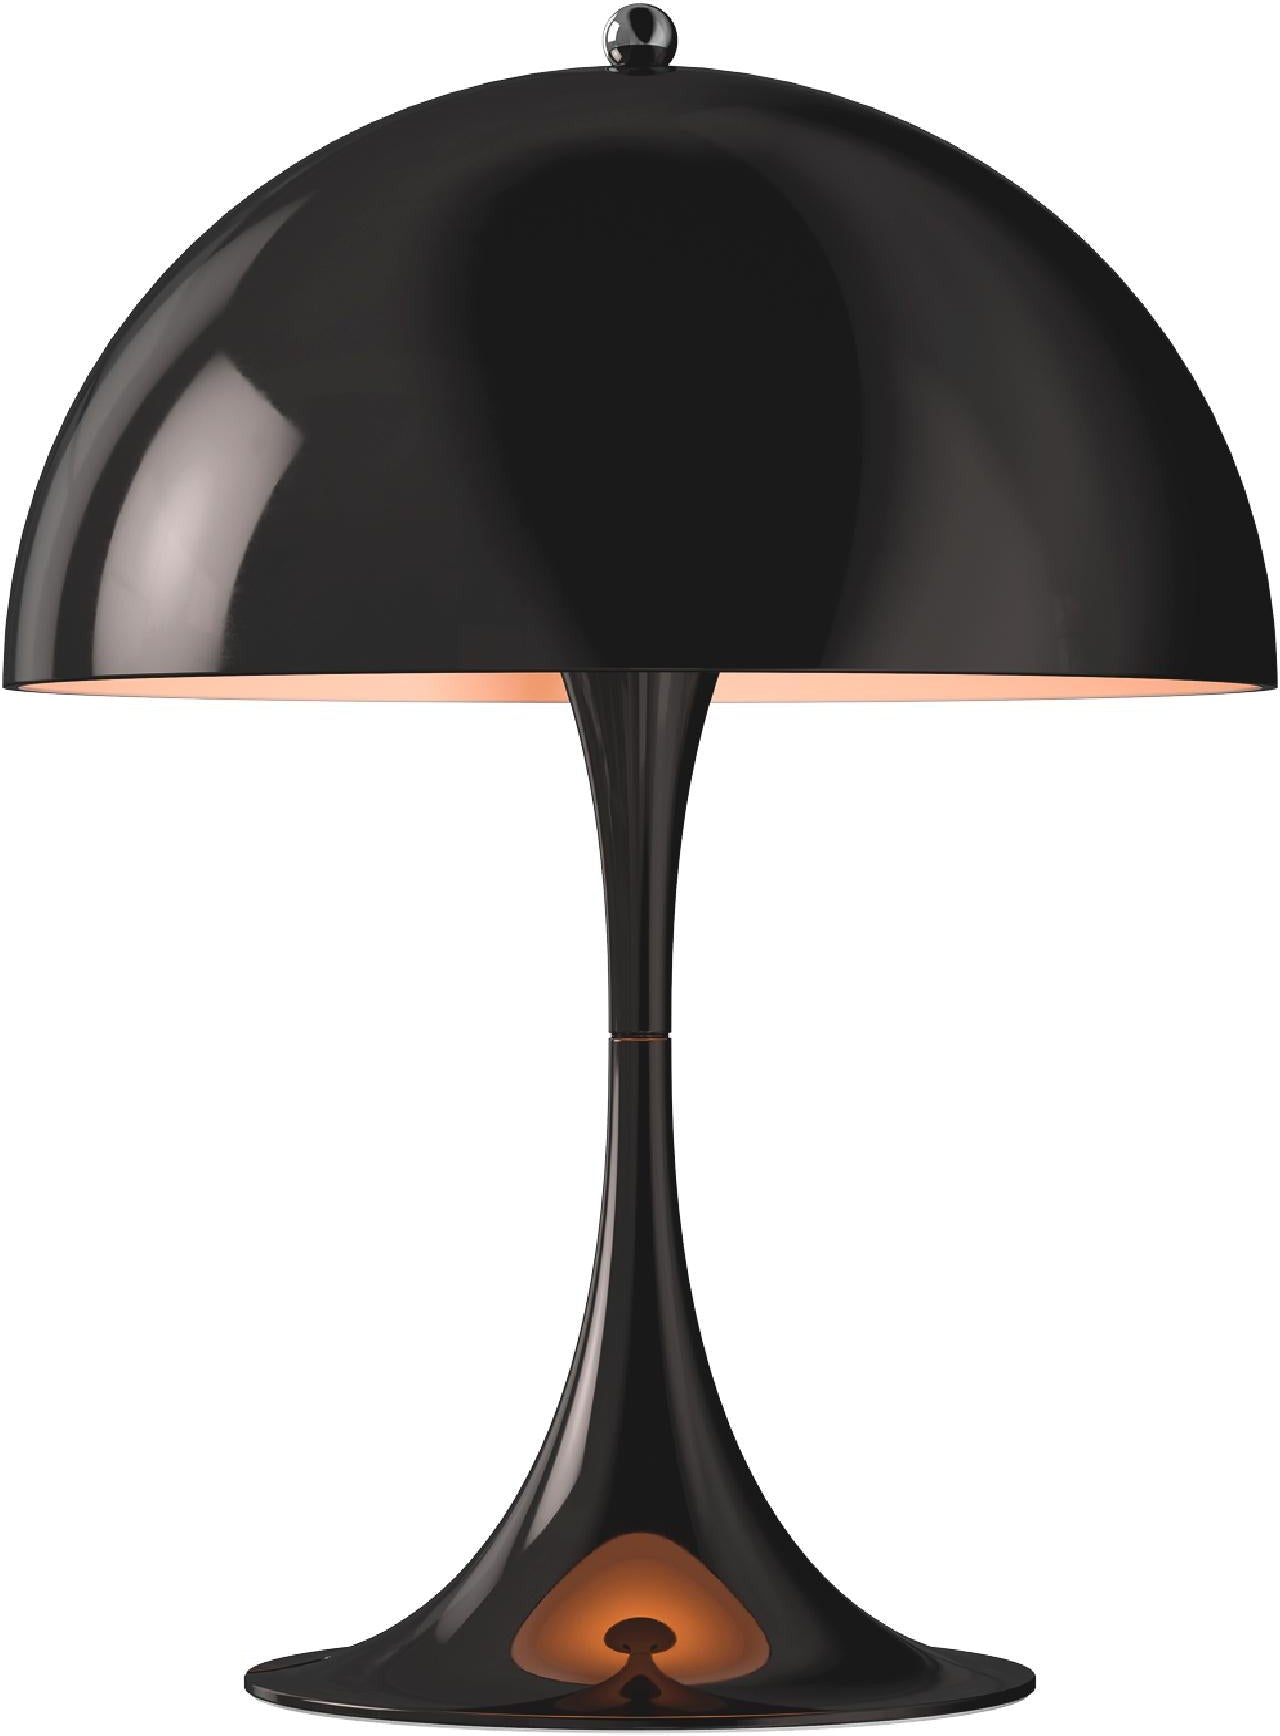 Louis Poulsen Panthella 250 Table Lamp førte 27 K V2, sort